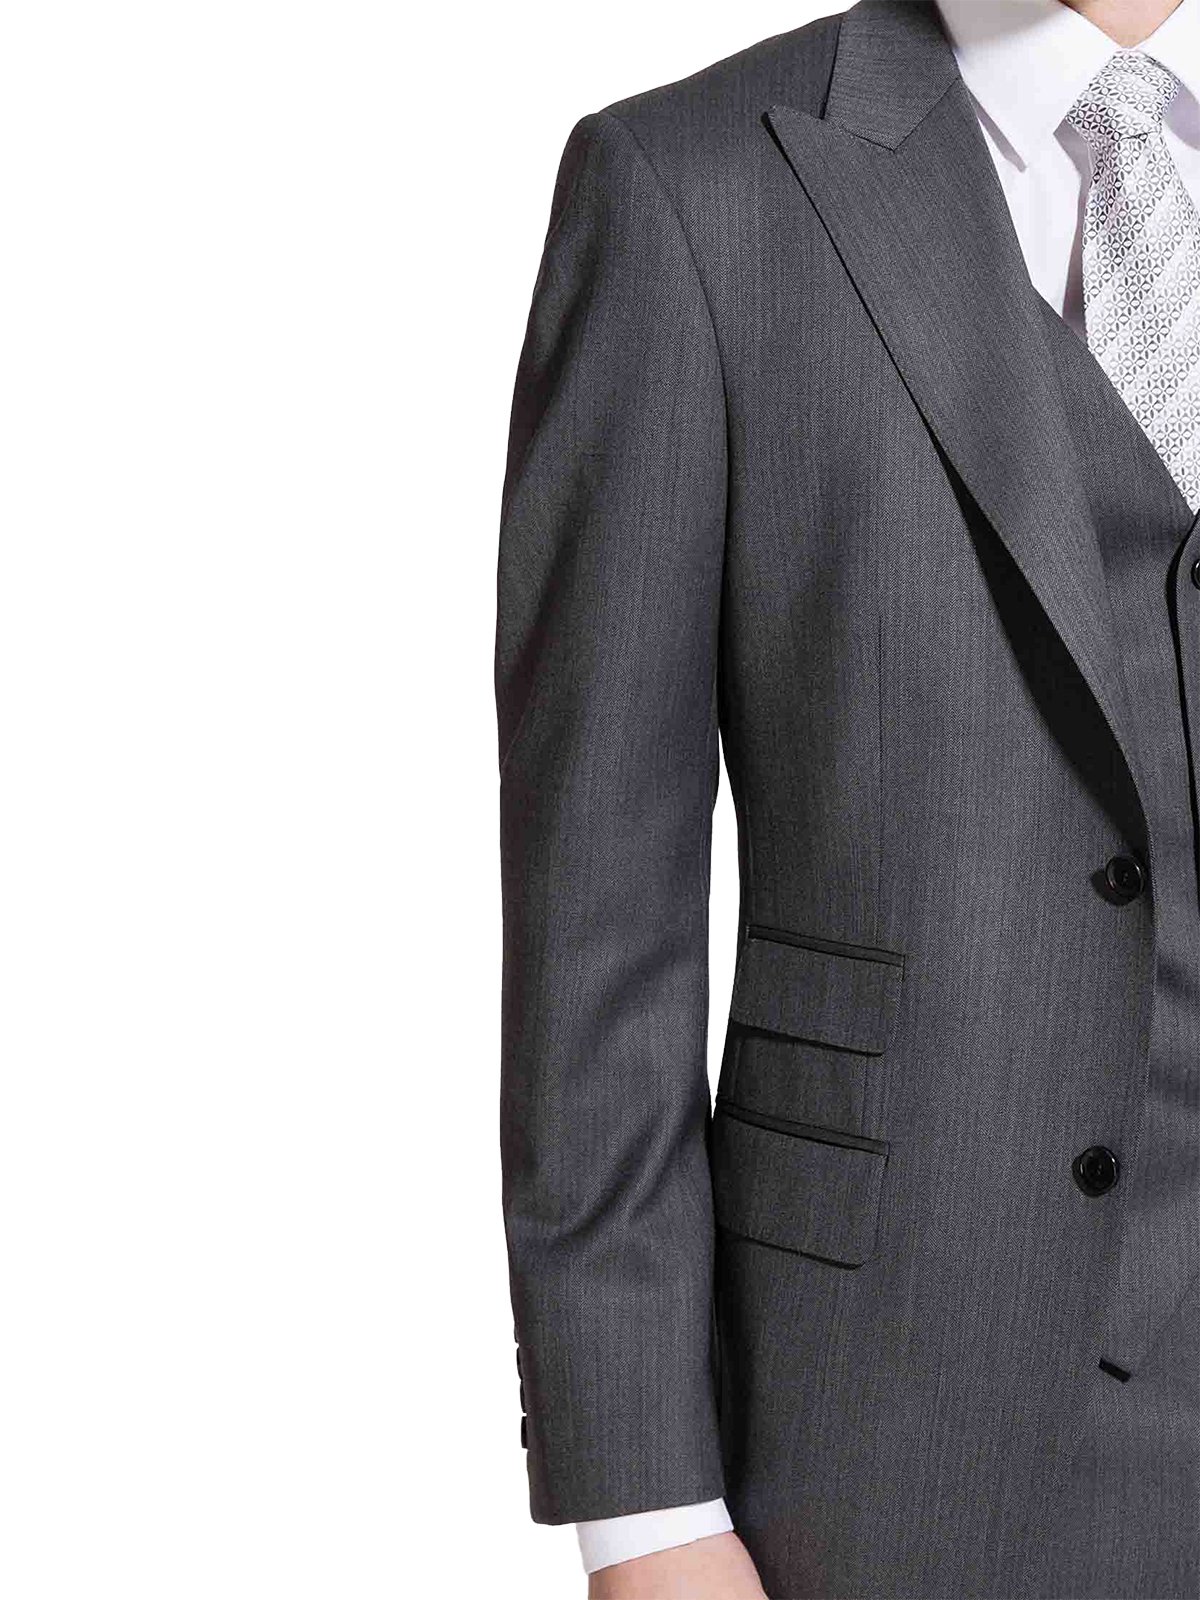 HBDesign Mens 3 Piece 2 Button Peak Lapel Slim Fit Pure Formal Suit Dark Grey